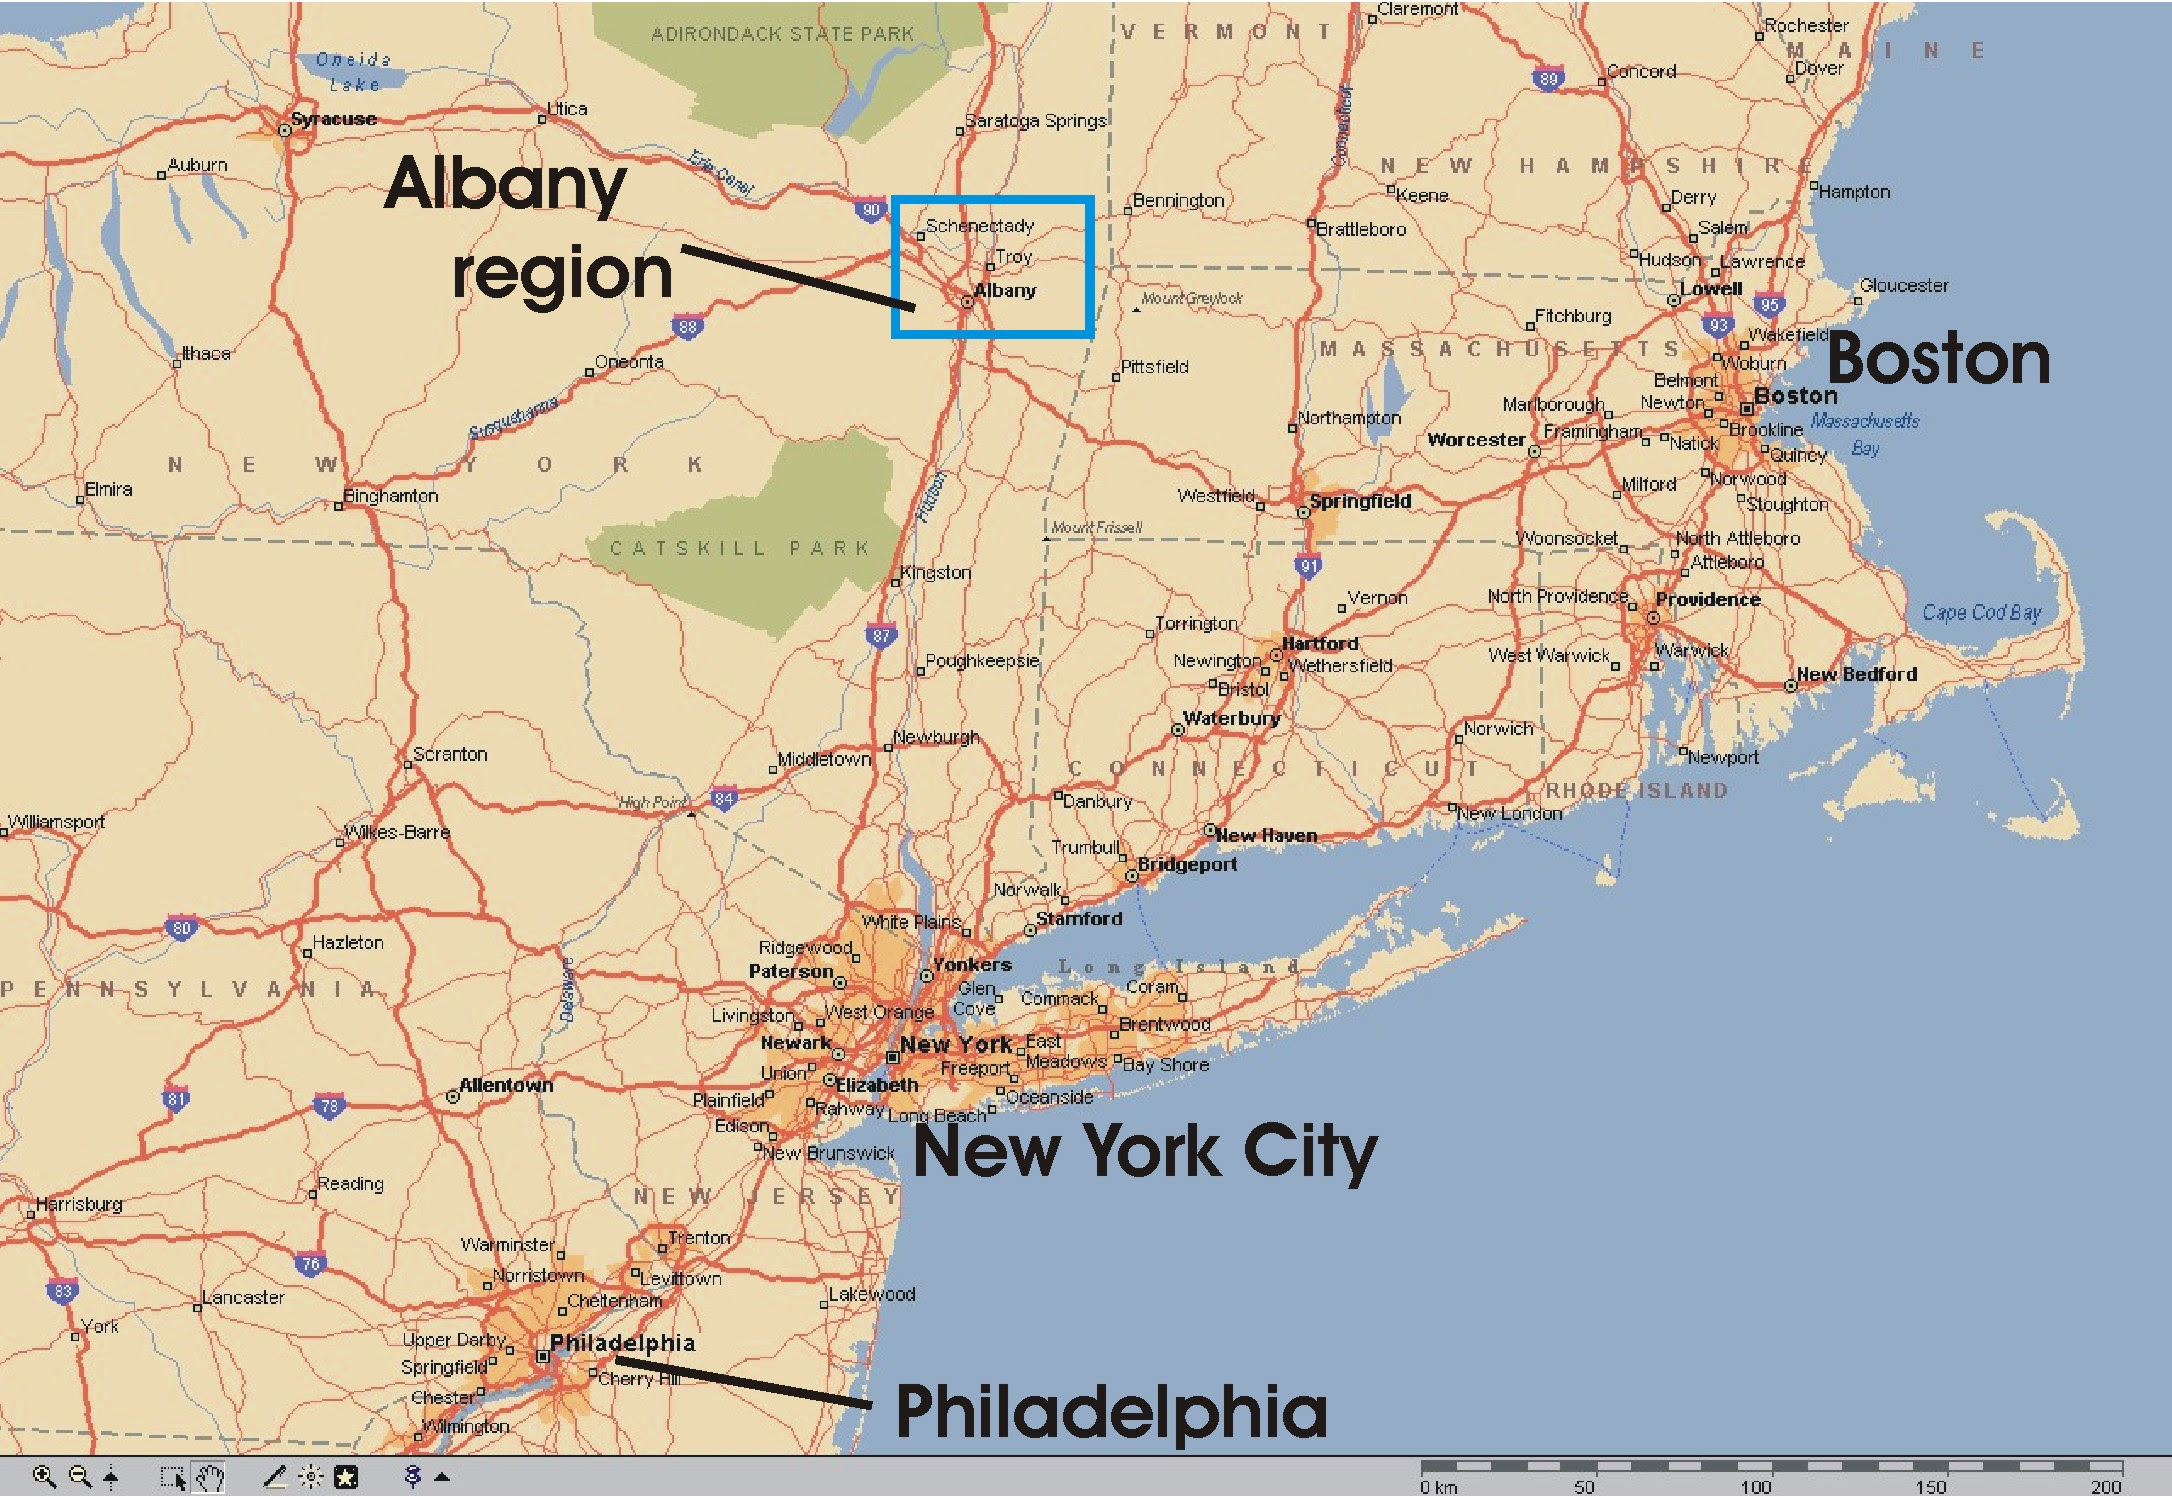 Где находится бостон. Саратога Спрингс на карте. Бостон США на карте и штат. Саратога на карте США. Бостон город в США на карте.